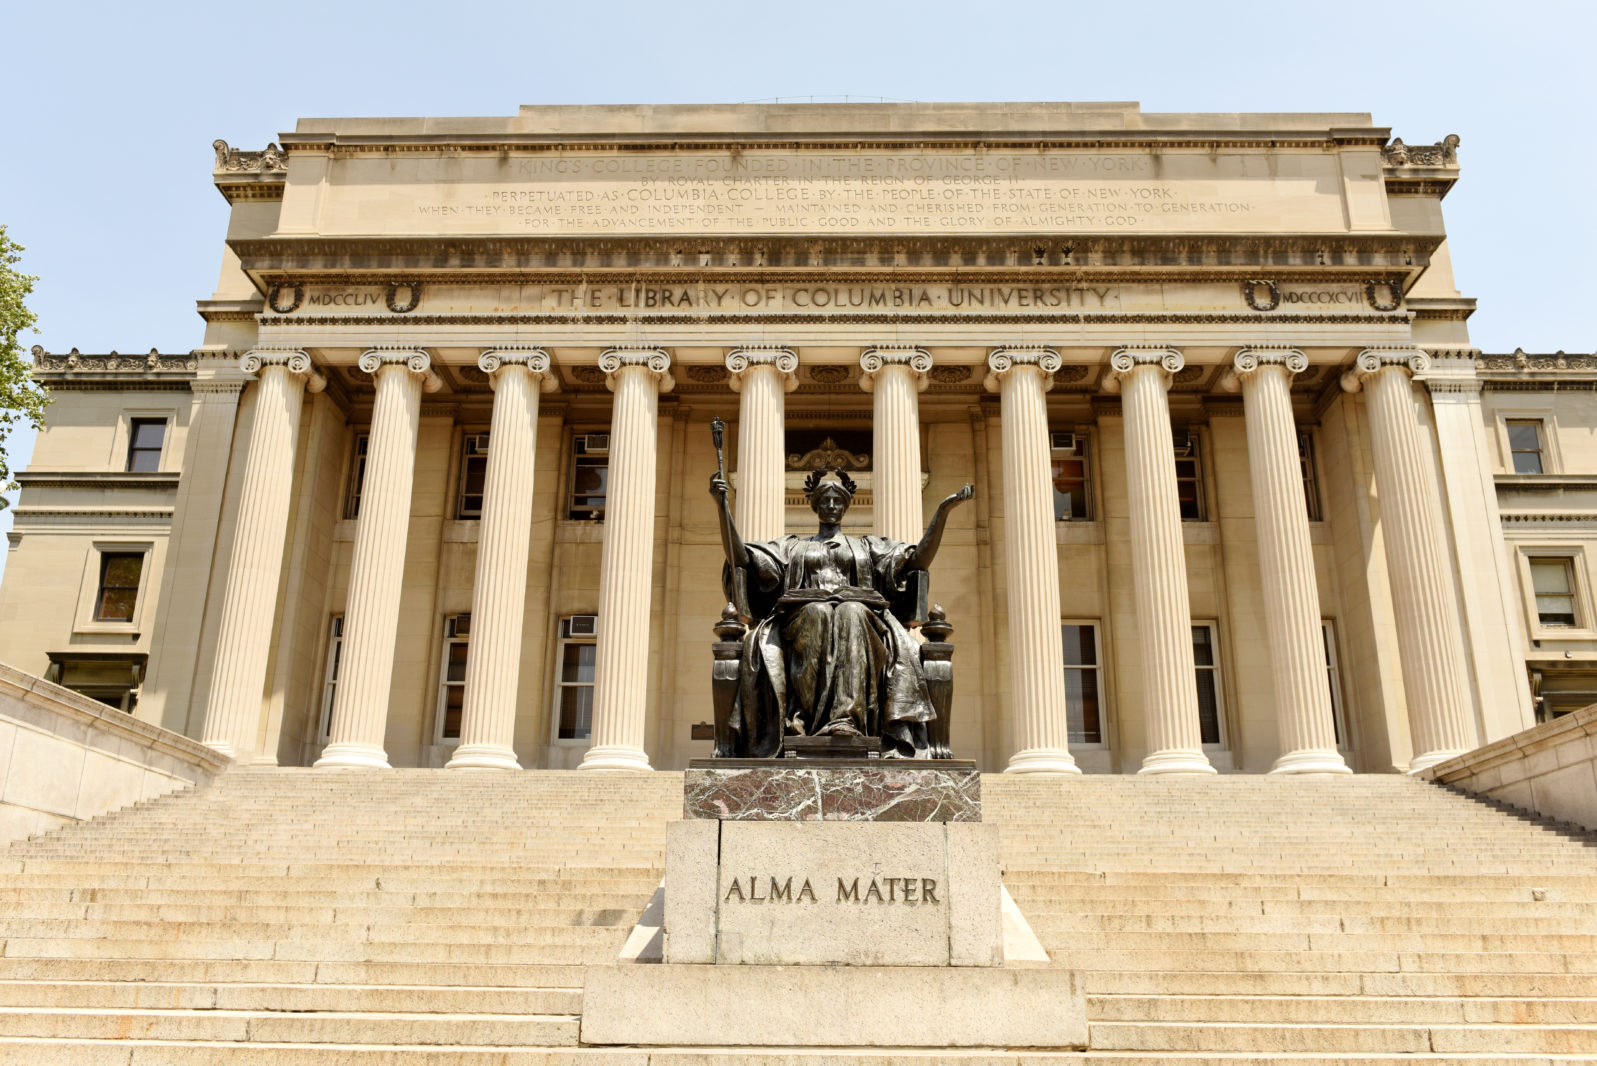 Alma Mater statue near the Columbia University library.